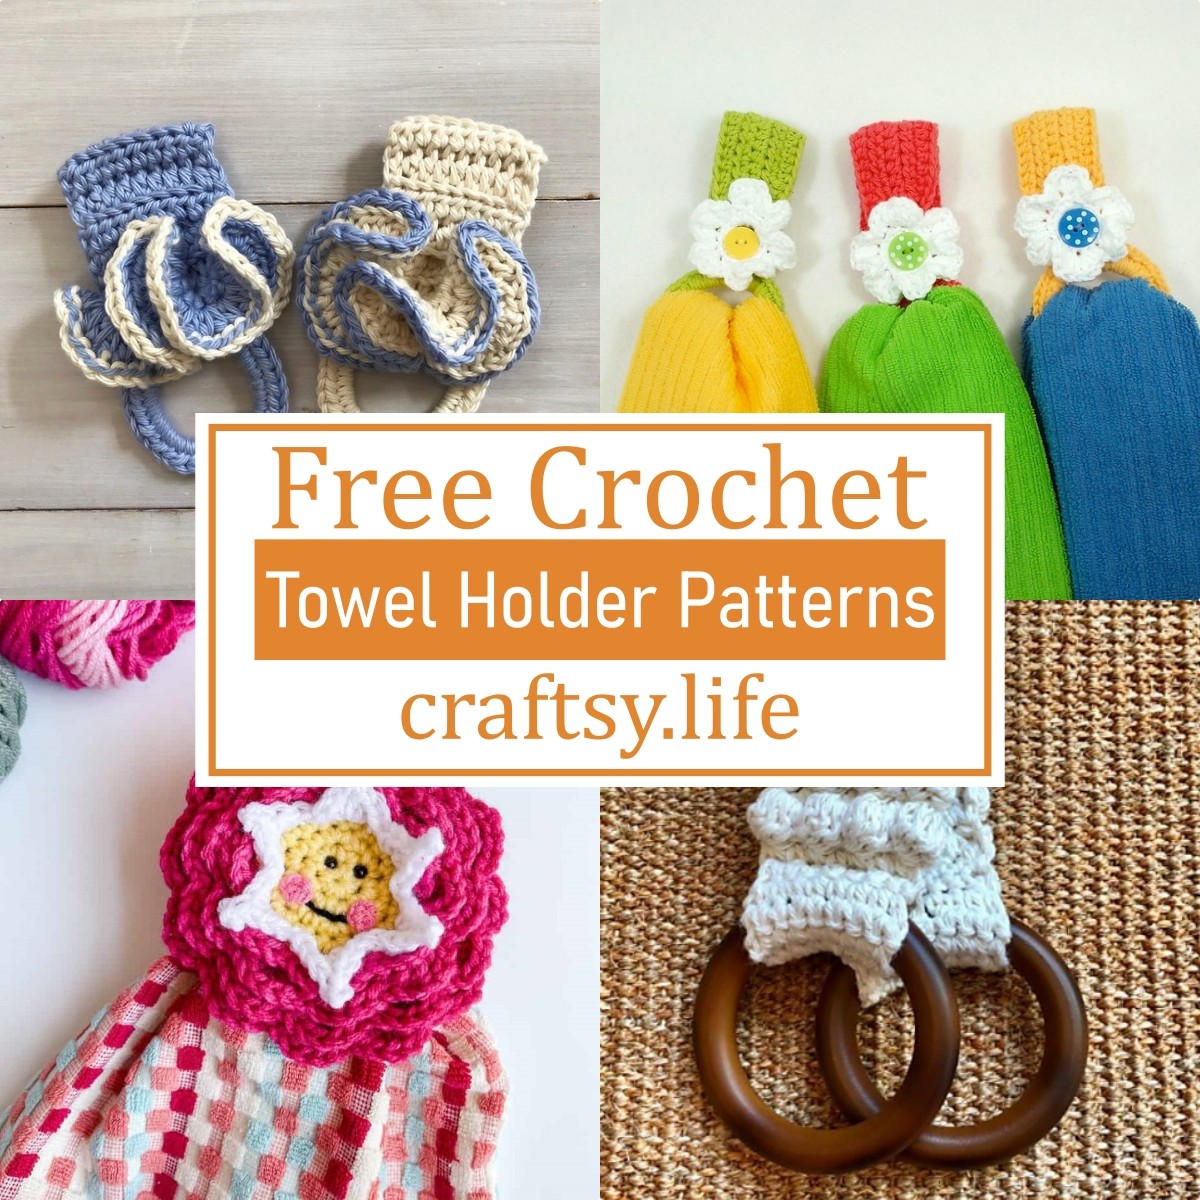 4 Free Crochet Towel Holder Patterns